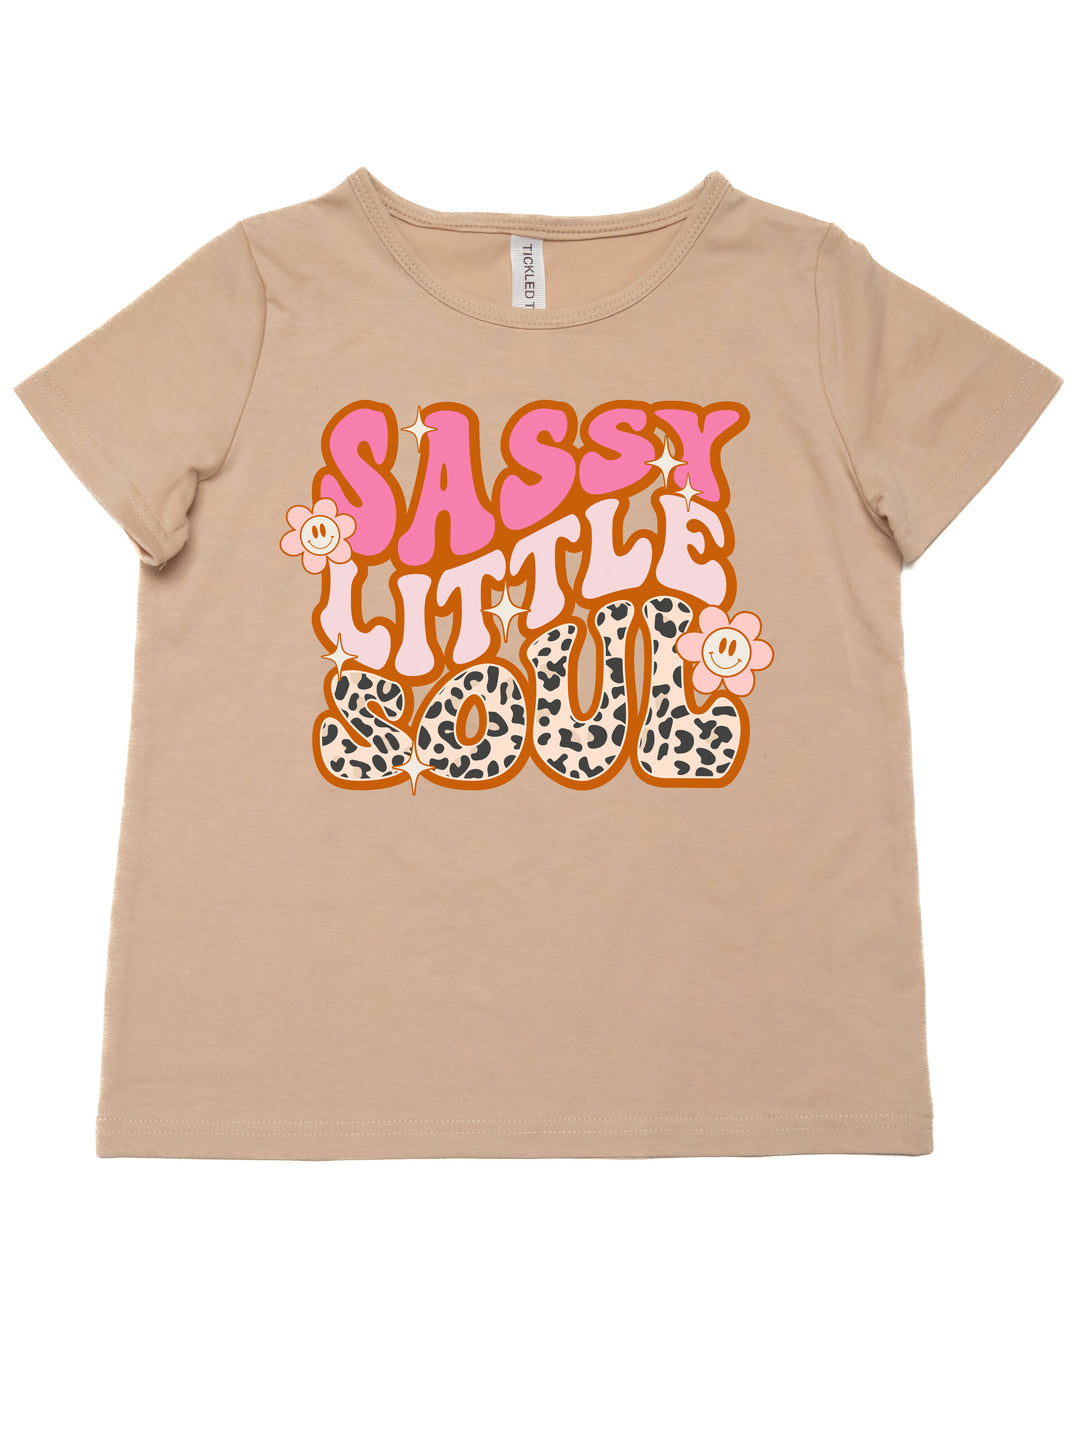 Sassy Little Soul Kids Graphic Tee